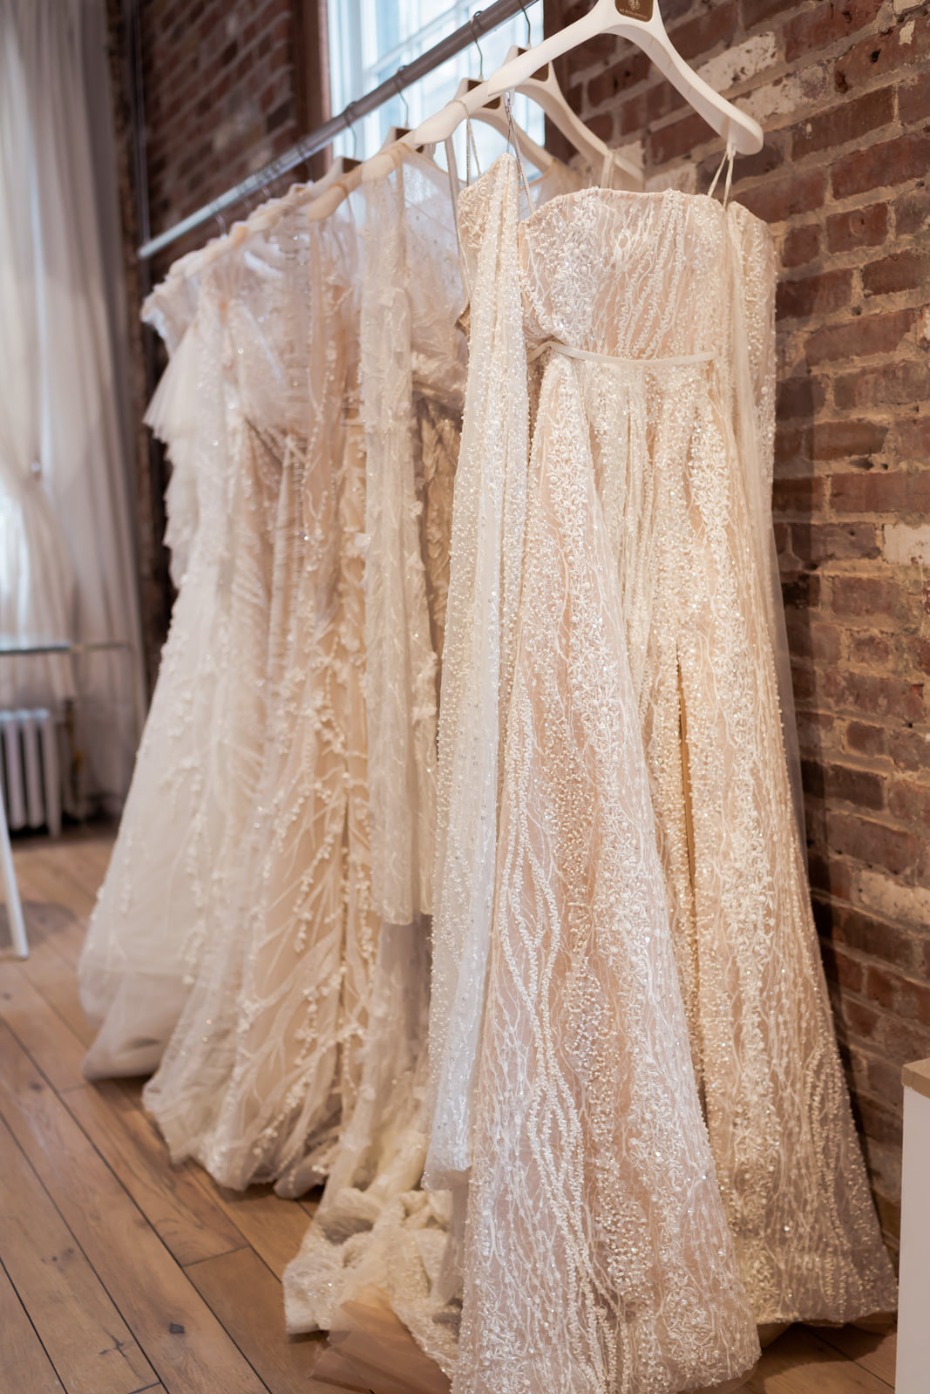 Lee Petra Grebenau 2019 Wedding Dress Collection